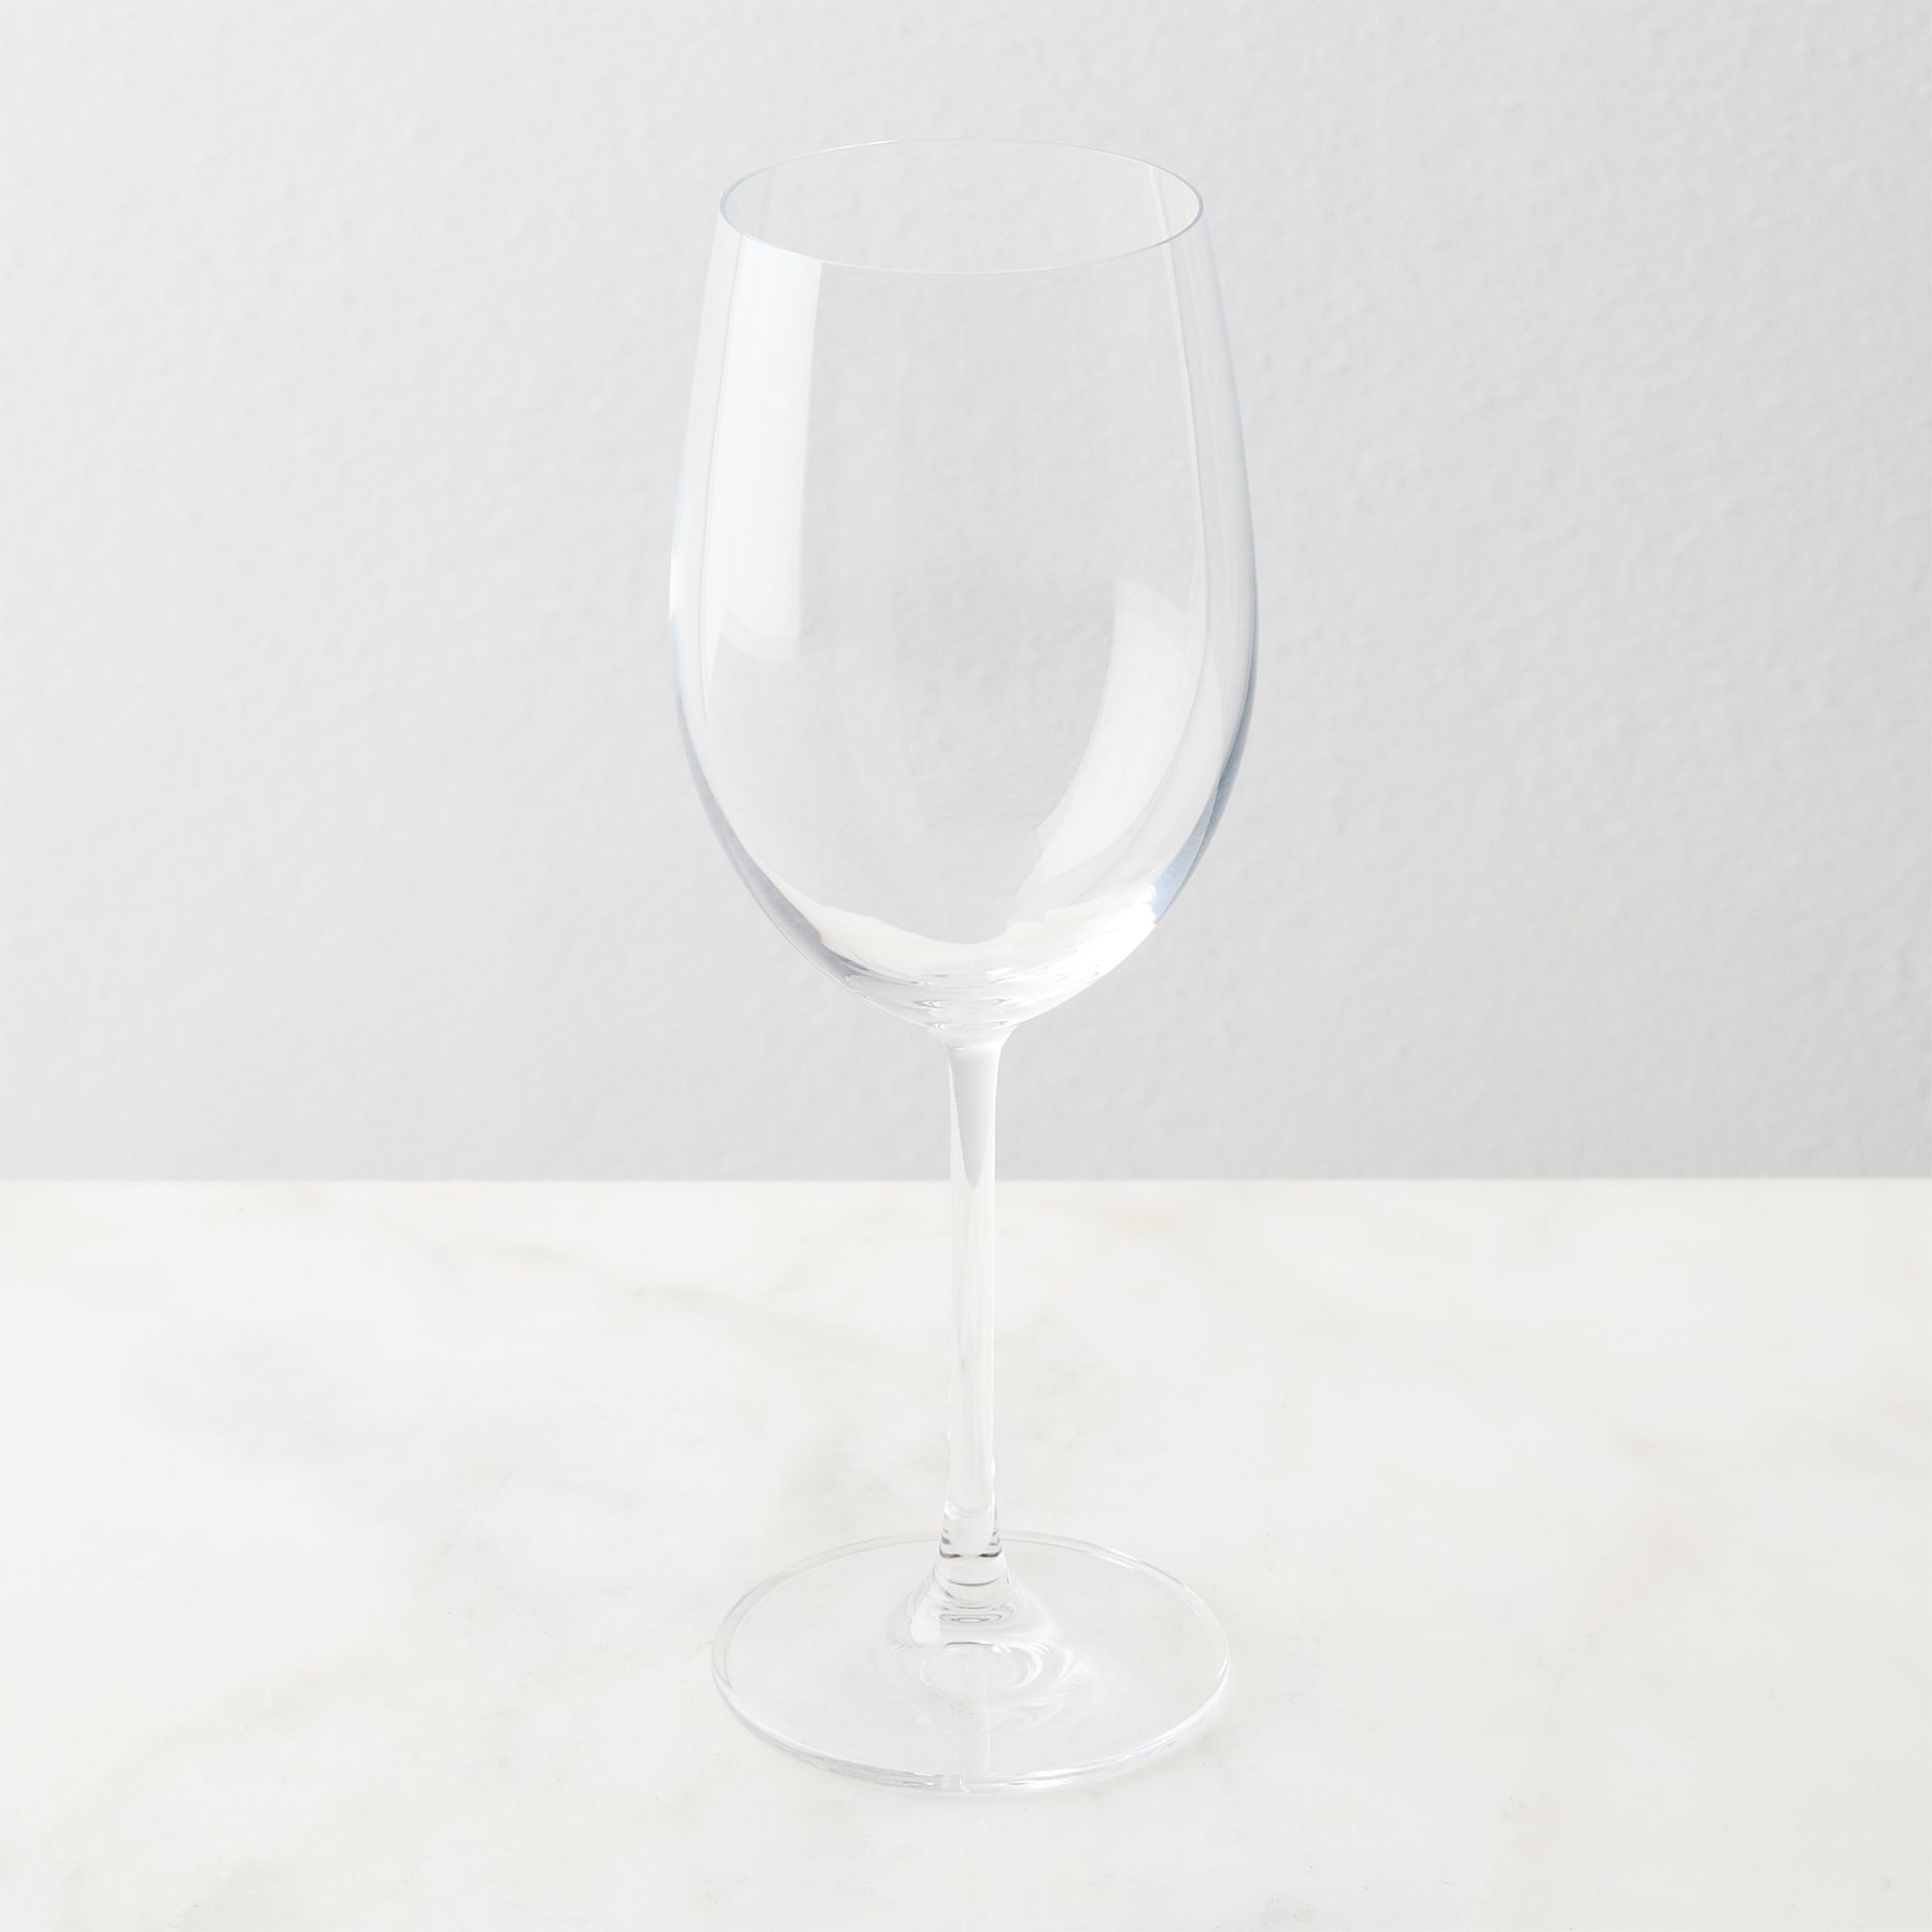 Nude Glass Vintage Bordeaux Glass (Set of 4) - 2Modern